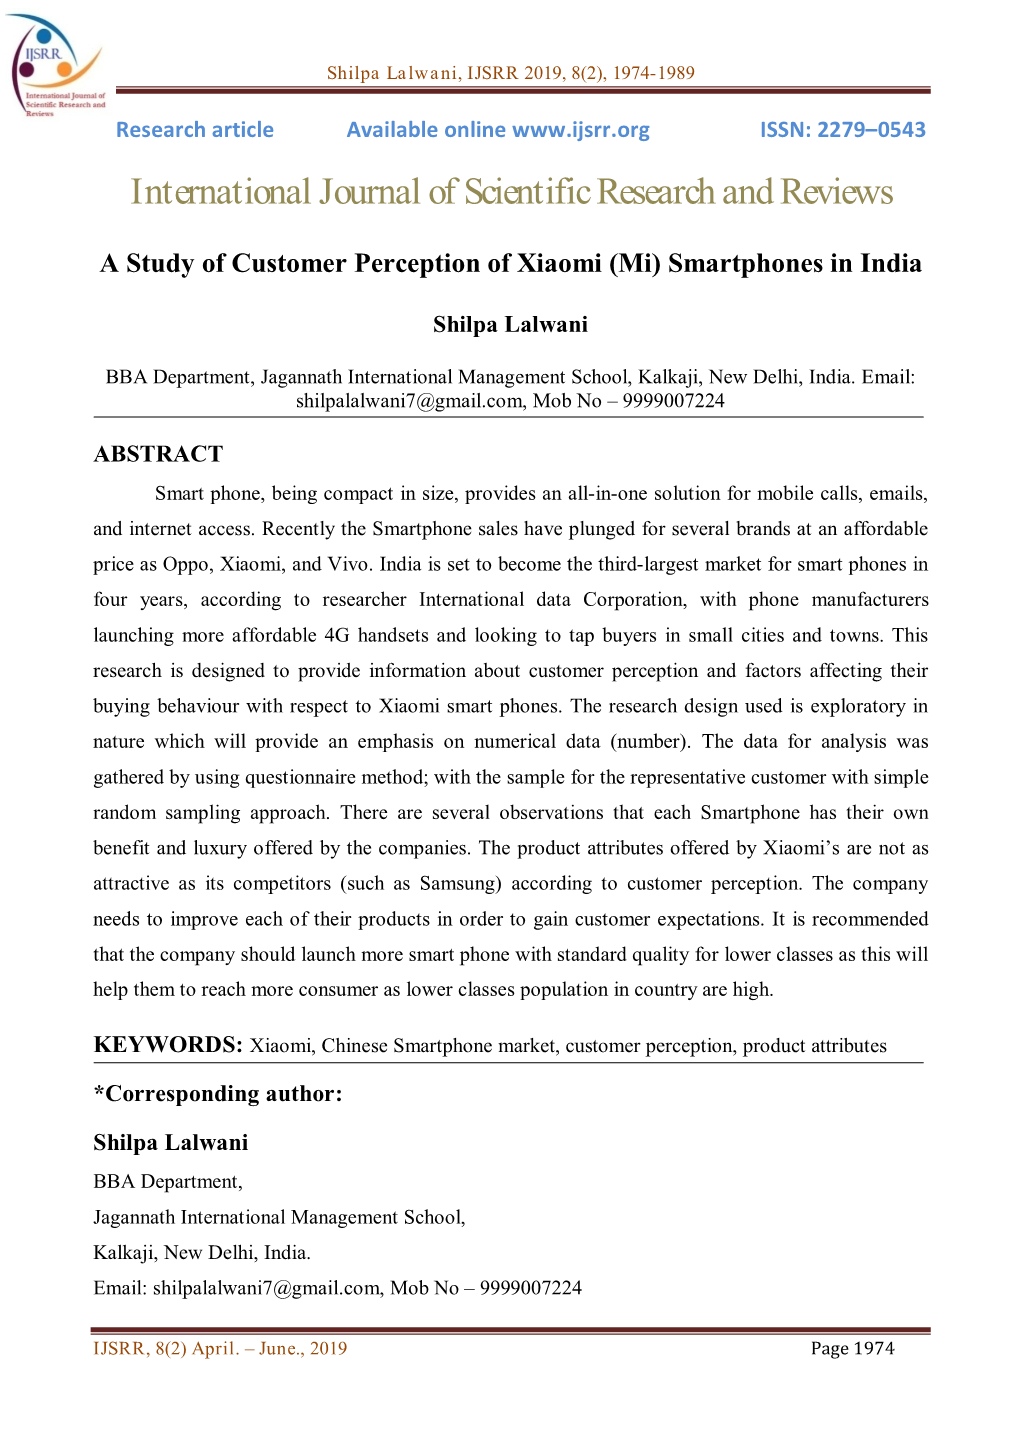 A Study of Customer Perception of Xiaomi (Mi) Smartphones in India